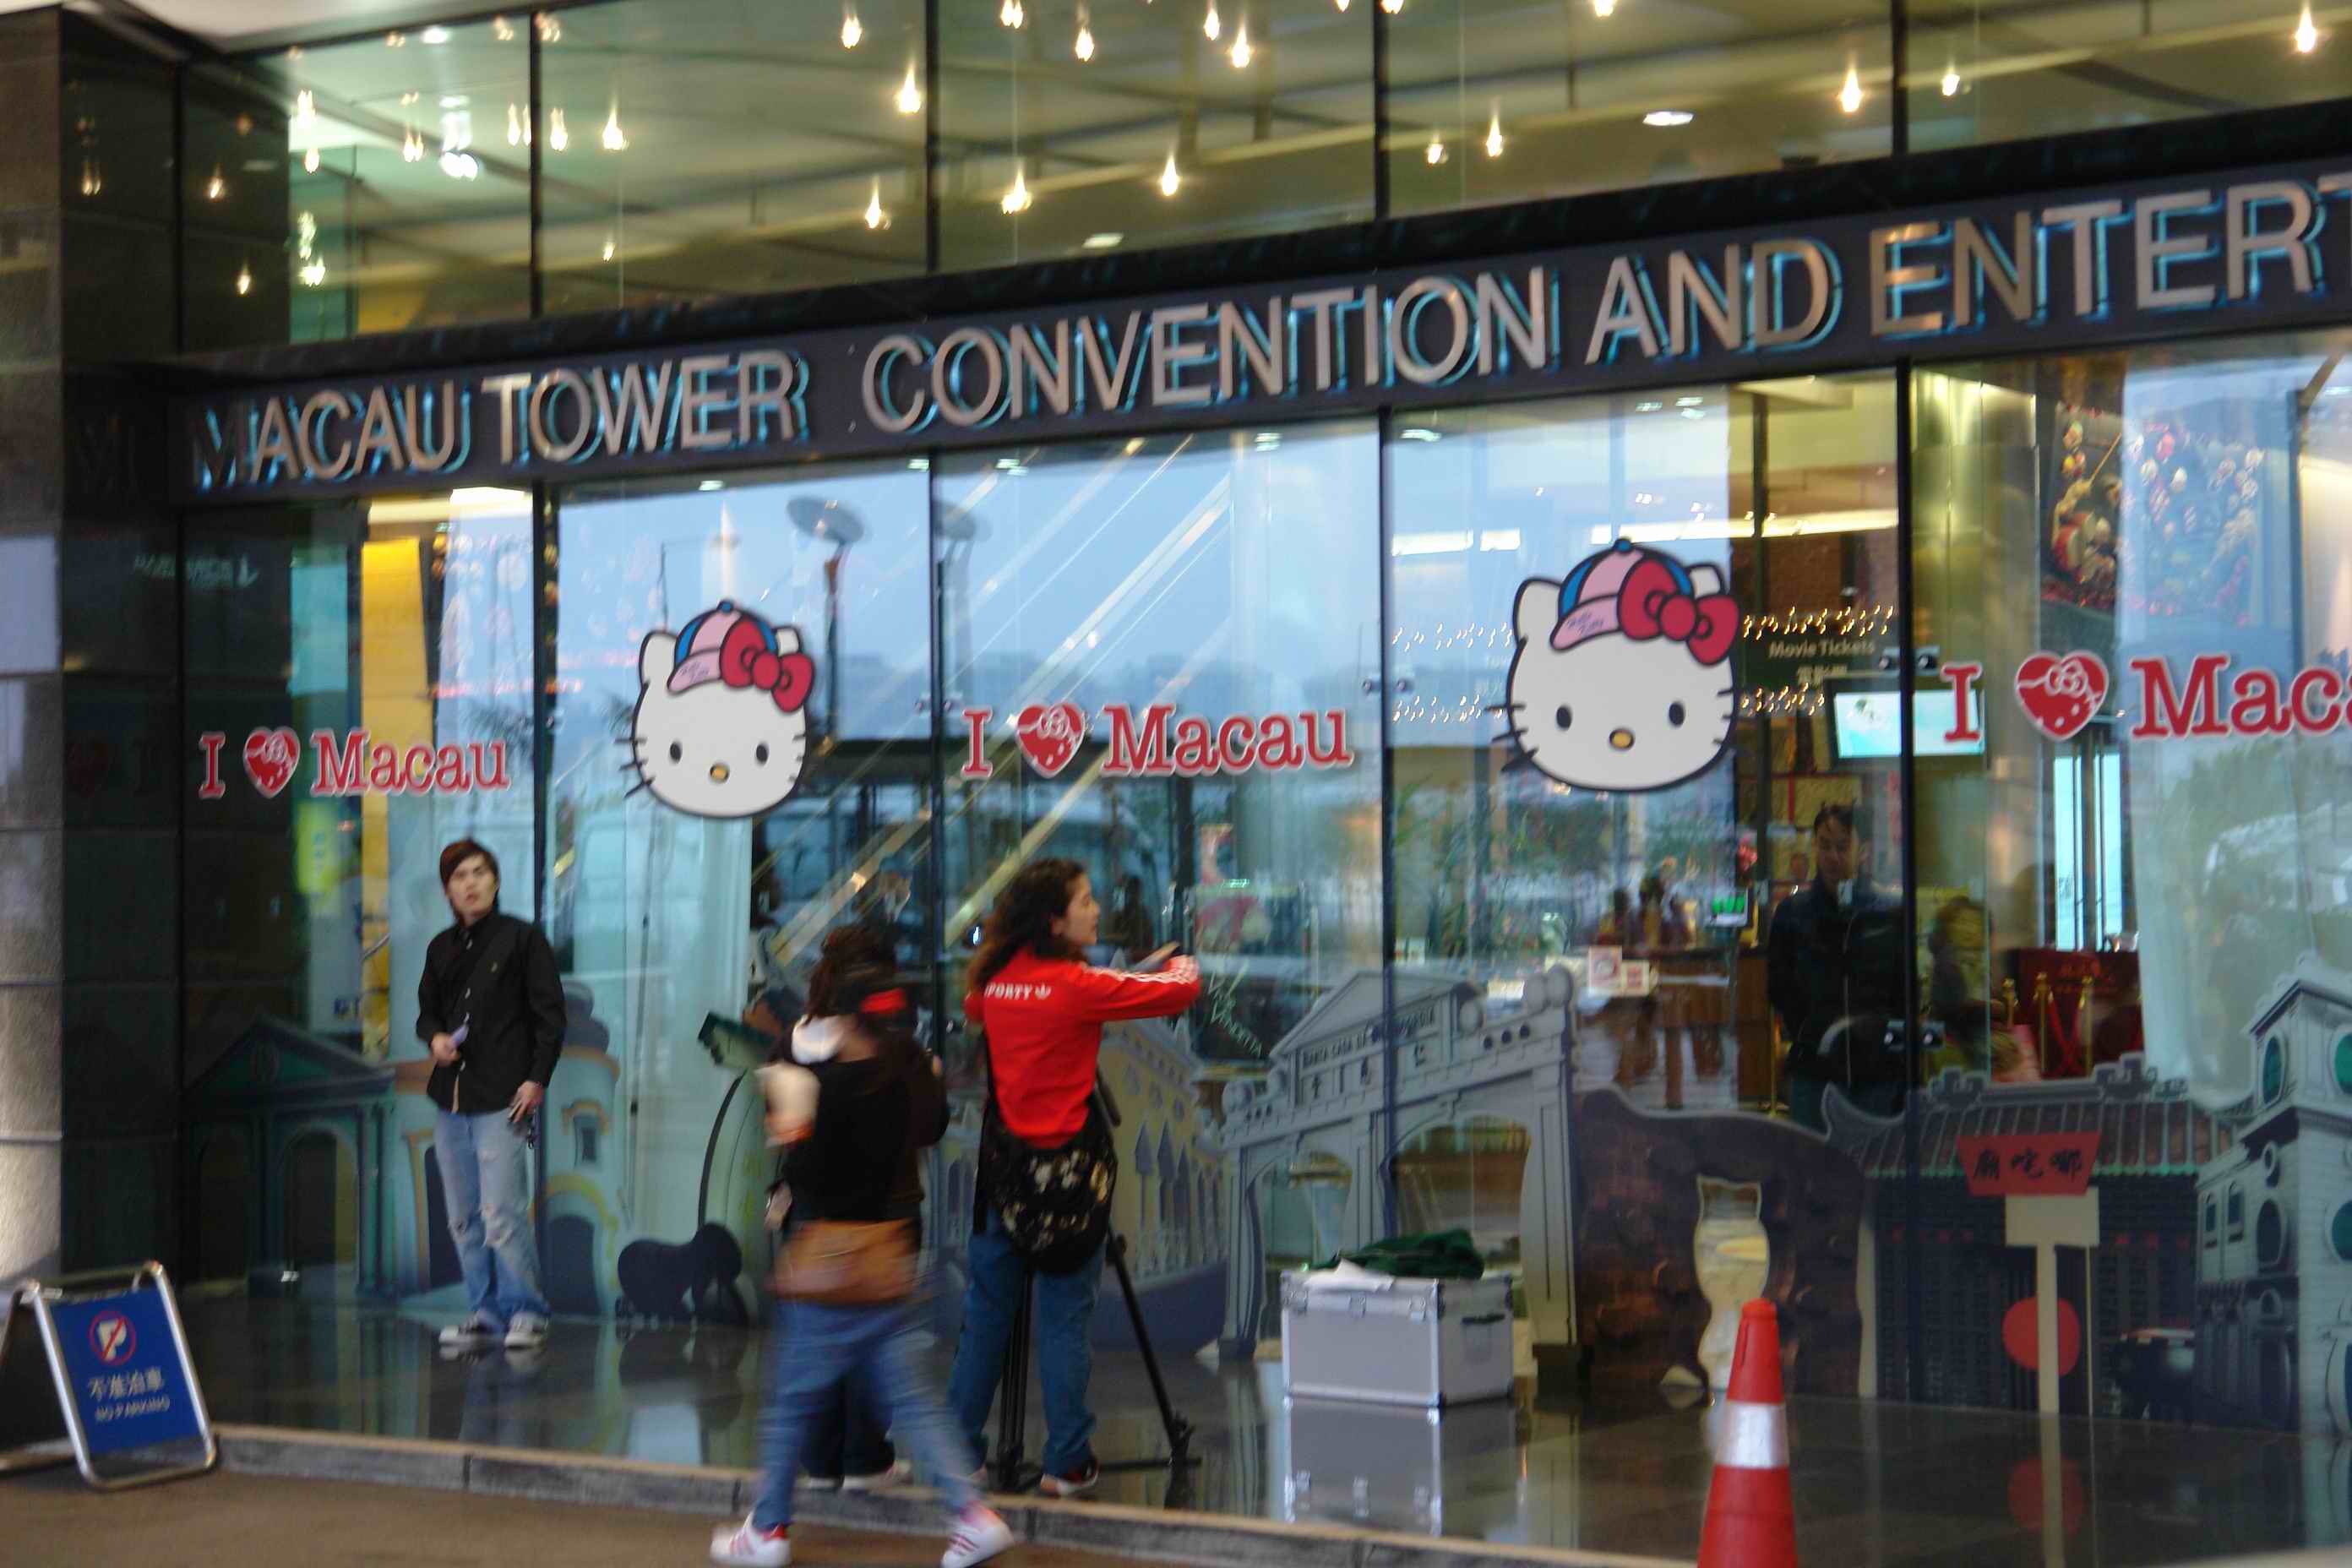 Macau Tower - Hello Kitty everywhere!!!!